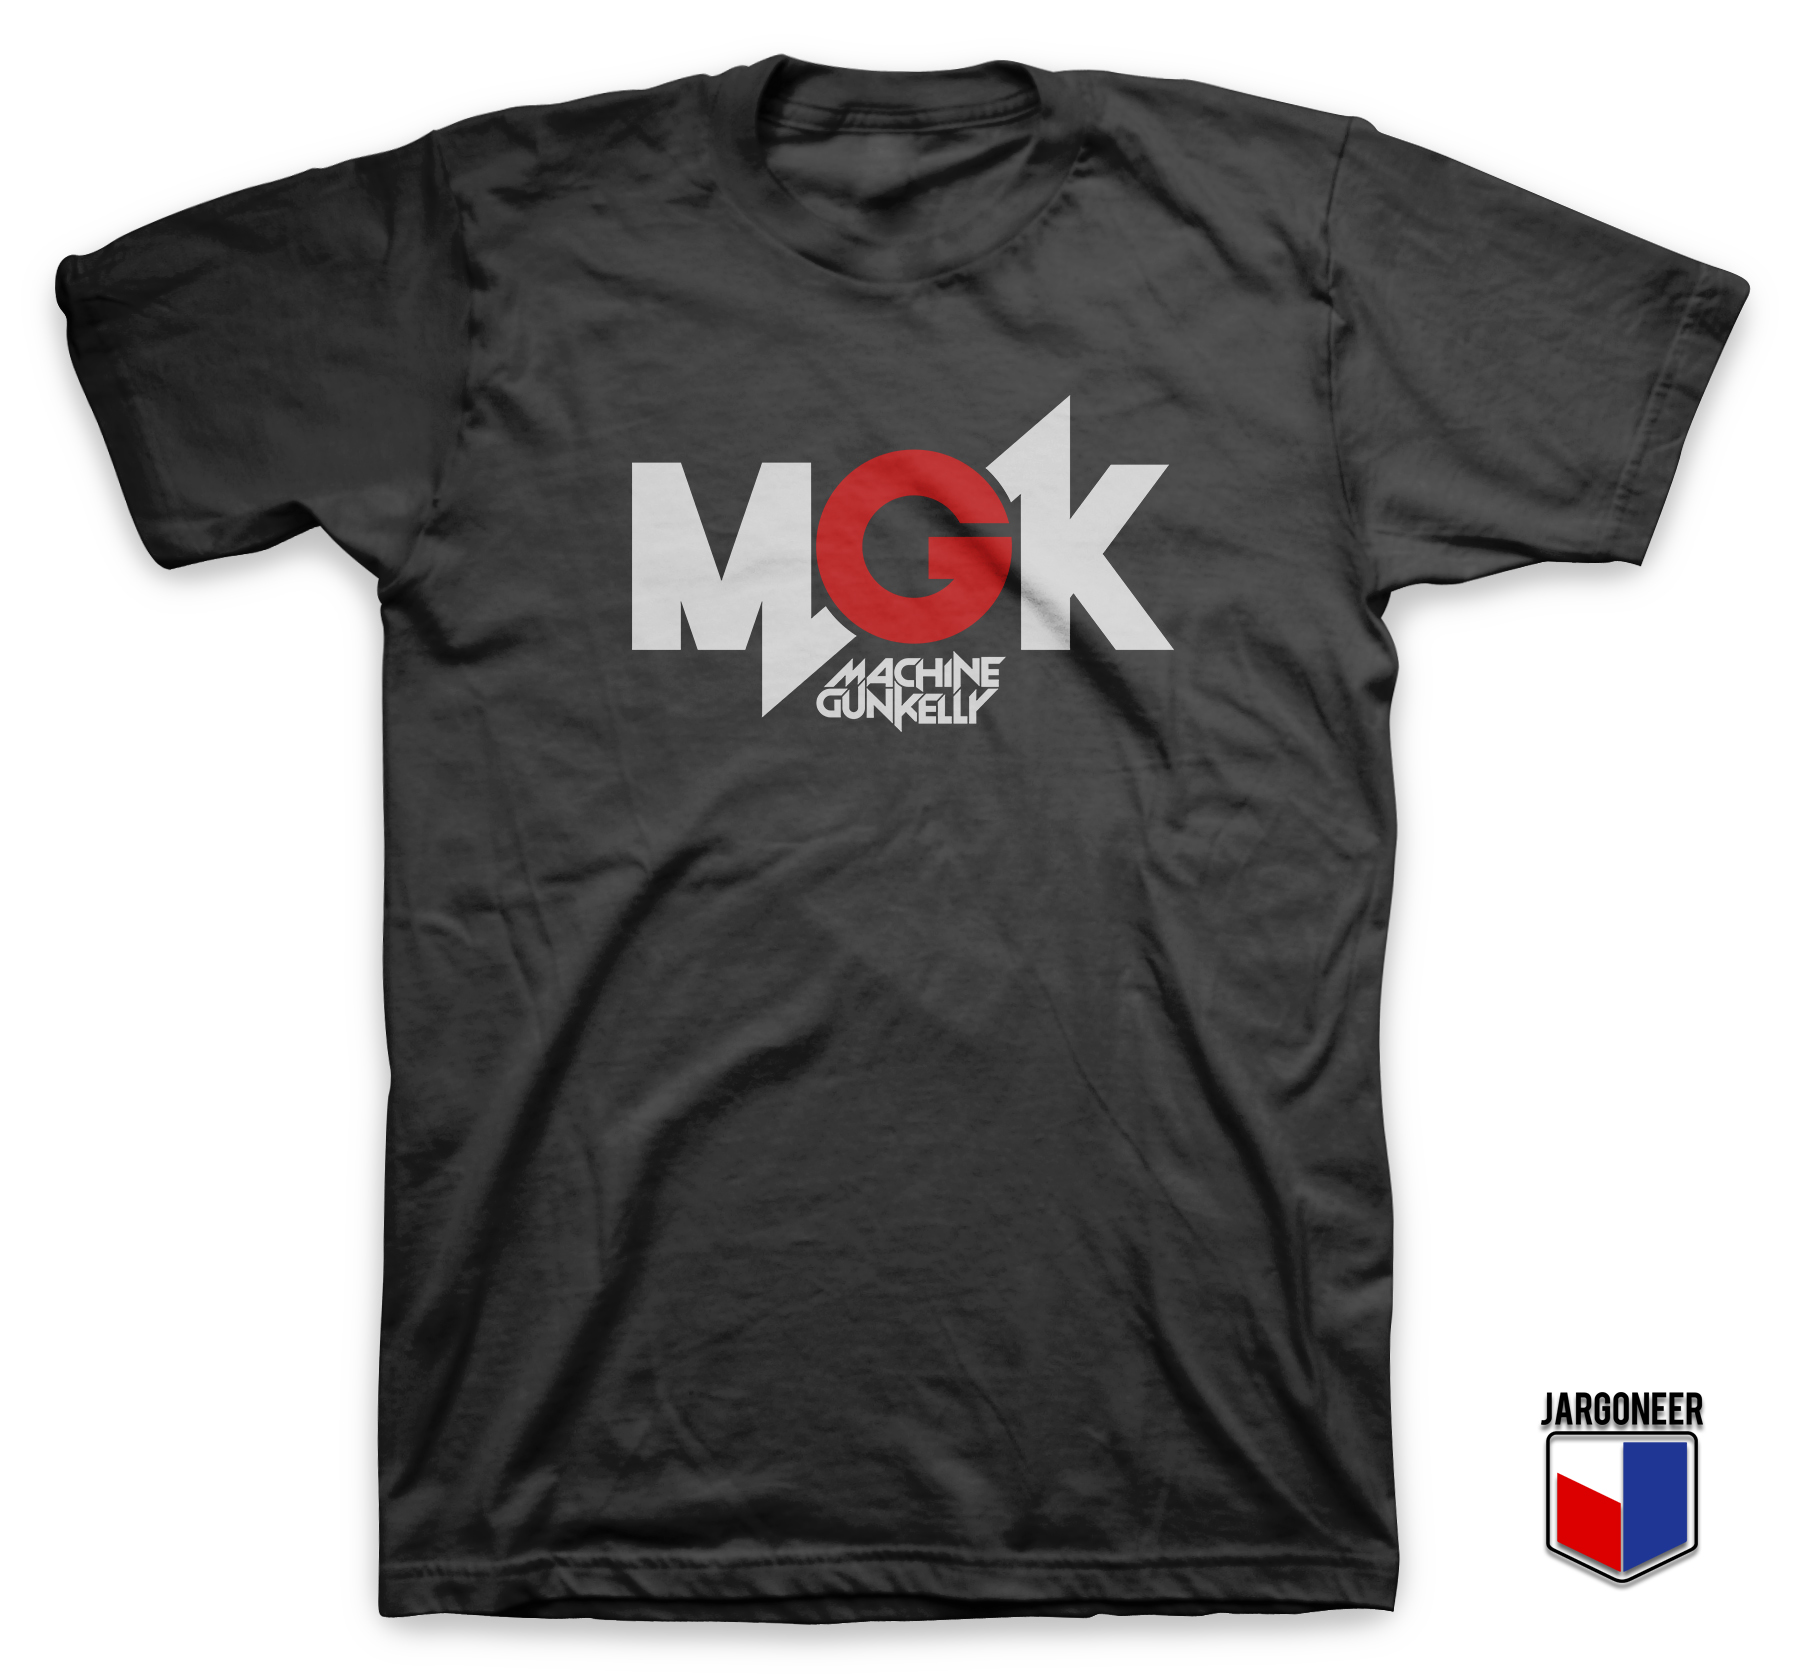 MGK Machine Gun Kelly - Shop Unique Graphic Cool Shirt Designs